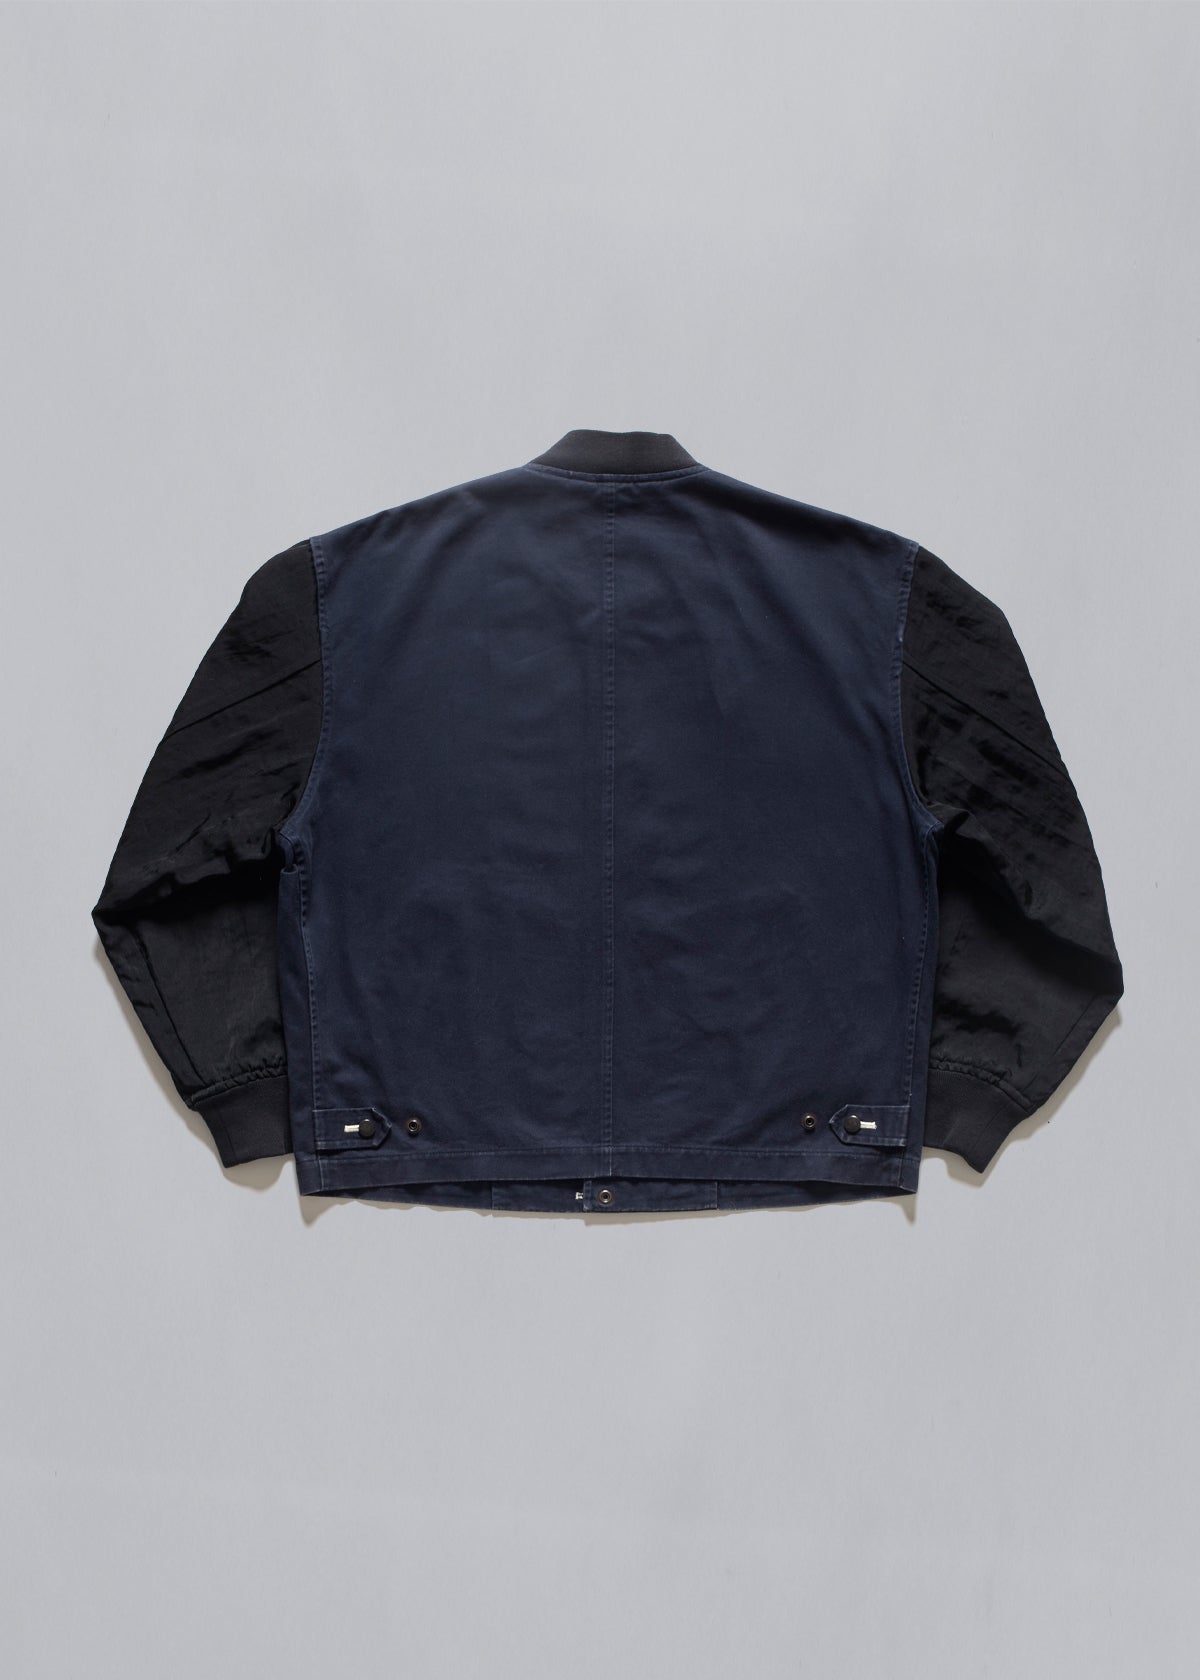 CDGH Cotton/Nylon Baseball Jacket 1994 - Large - The Archivist Store